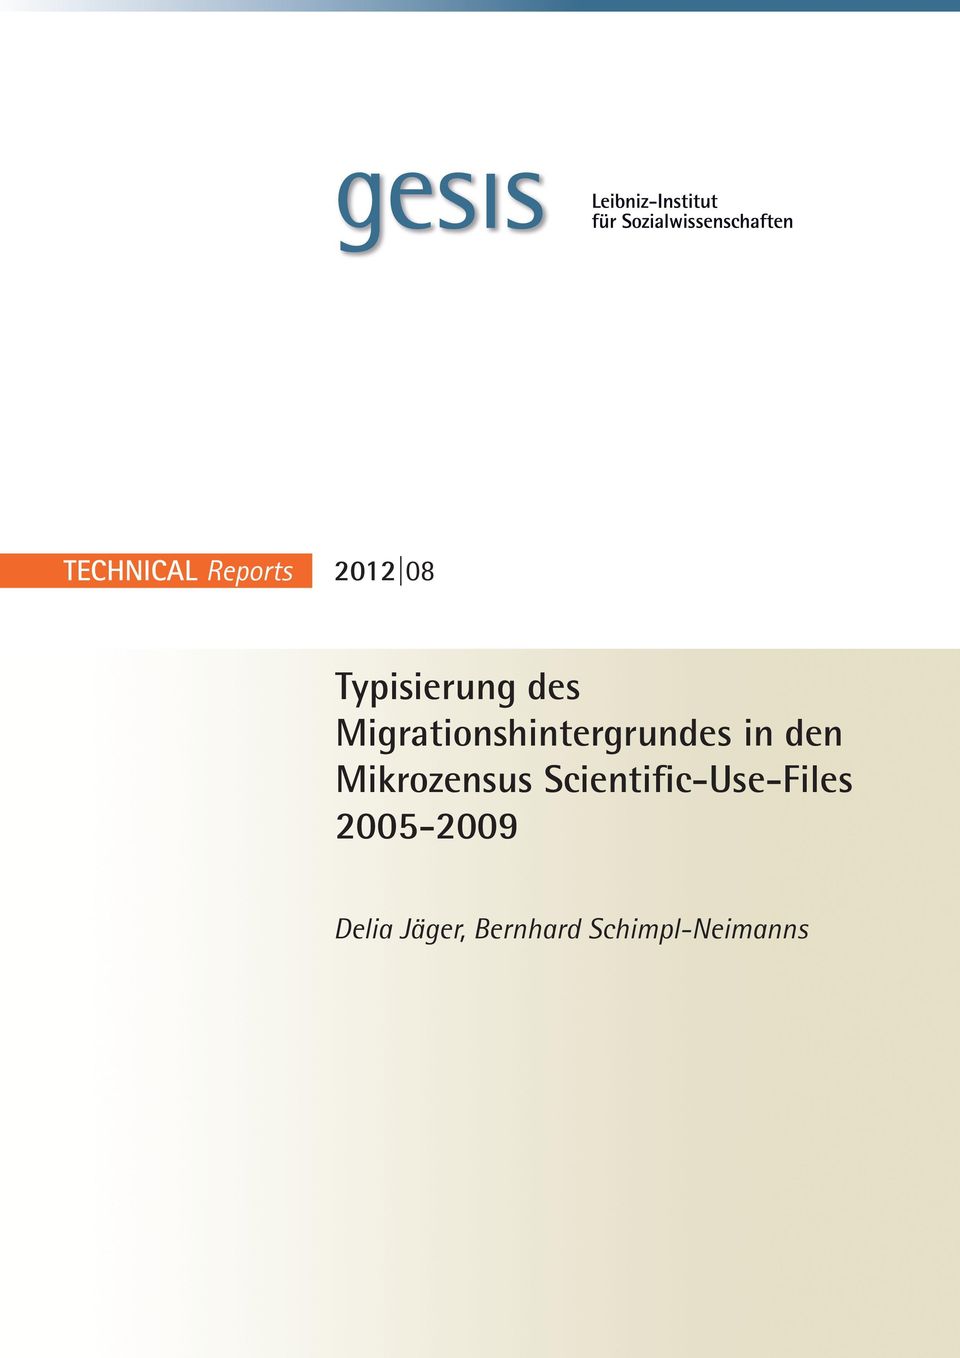 Mikrozensus Scientific-Use-Files